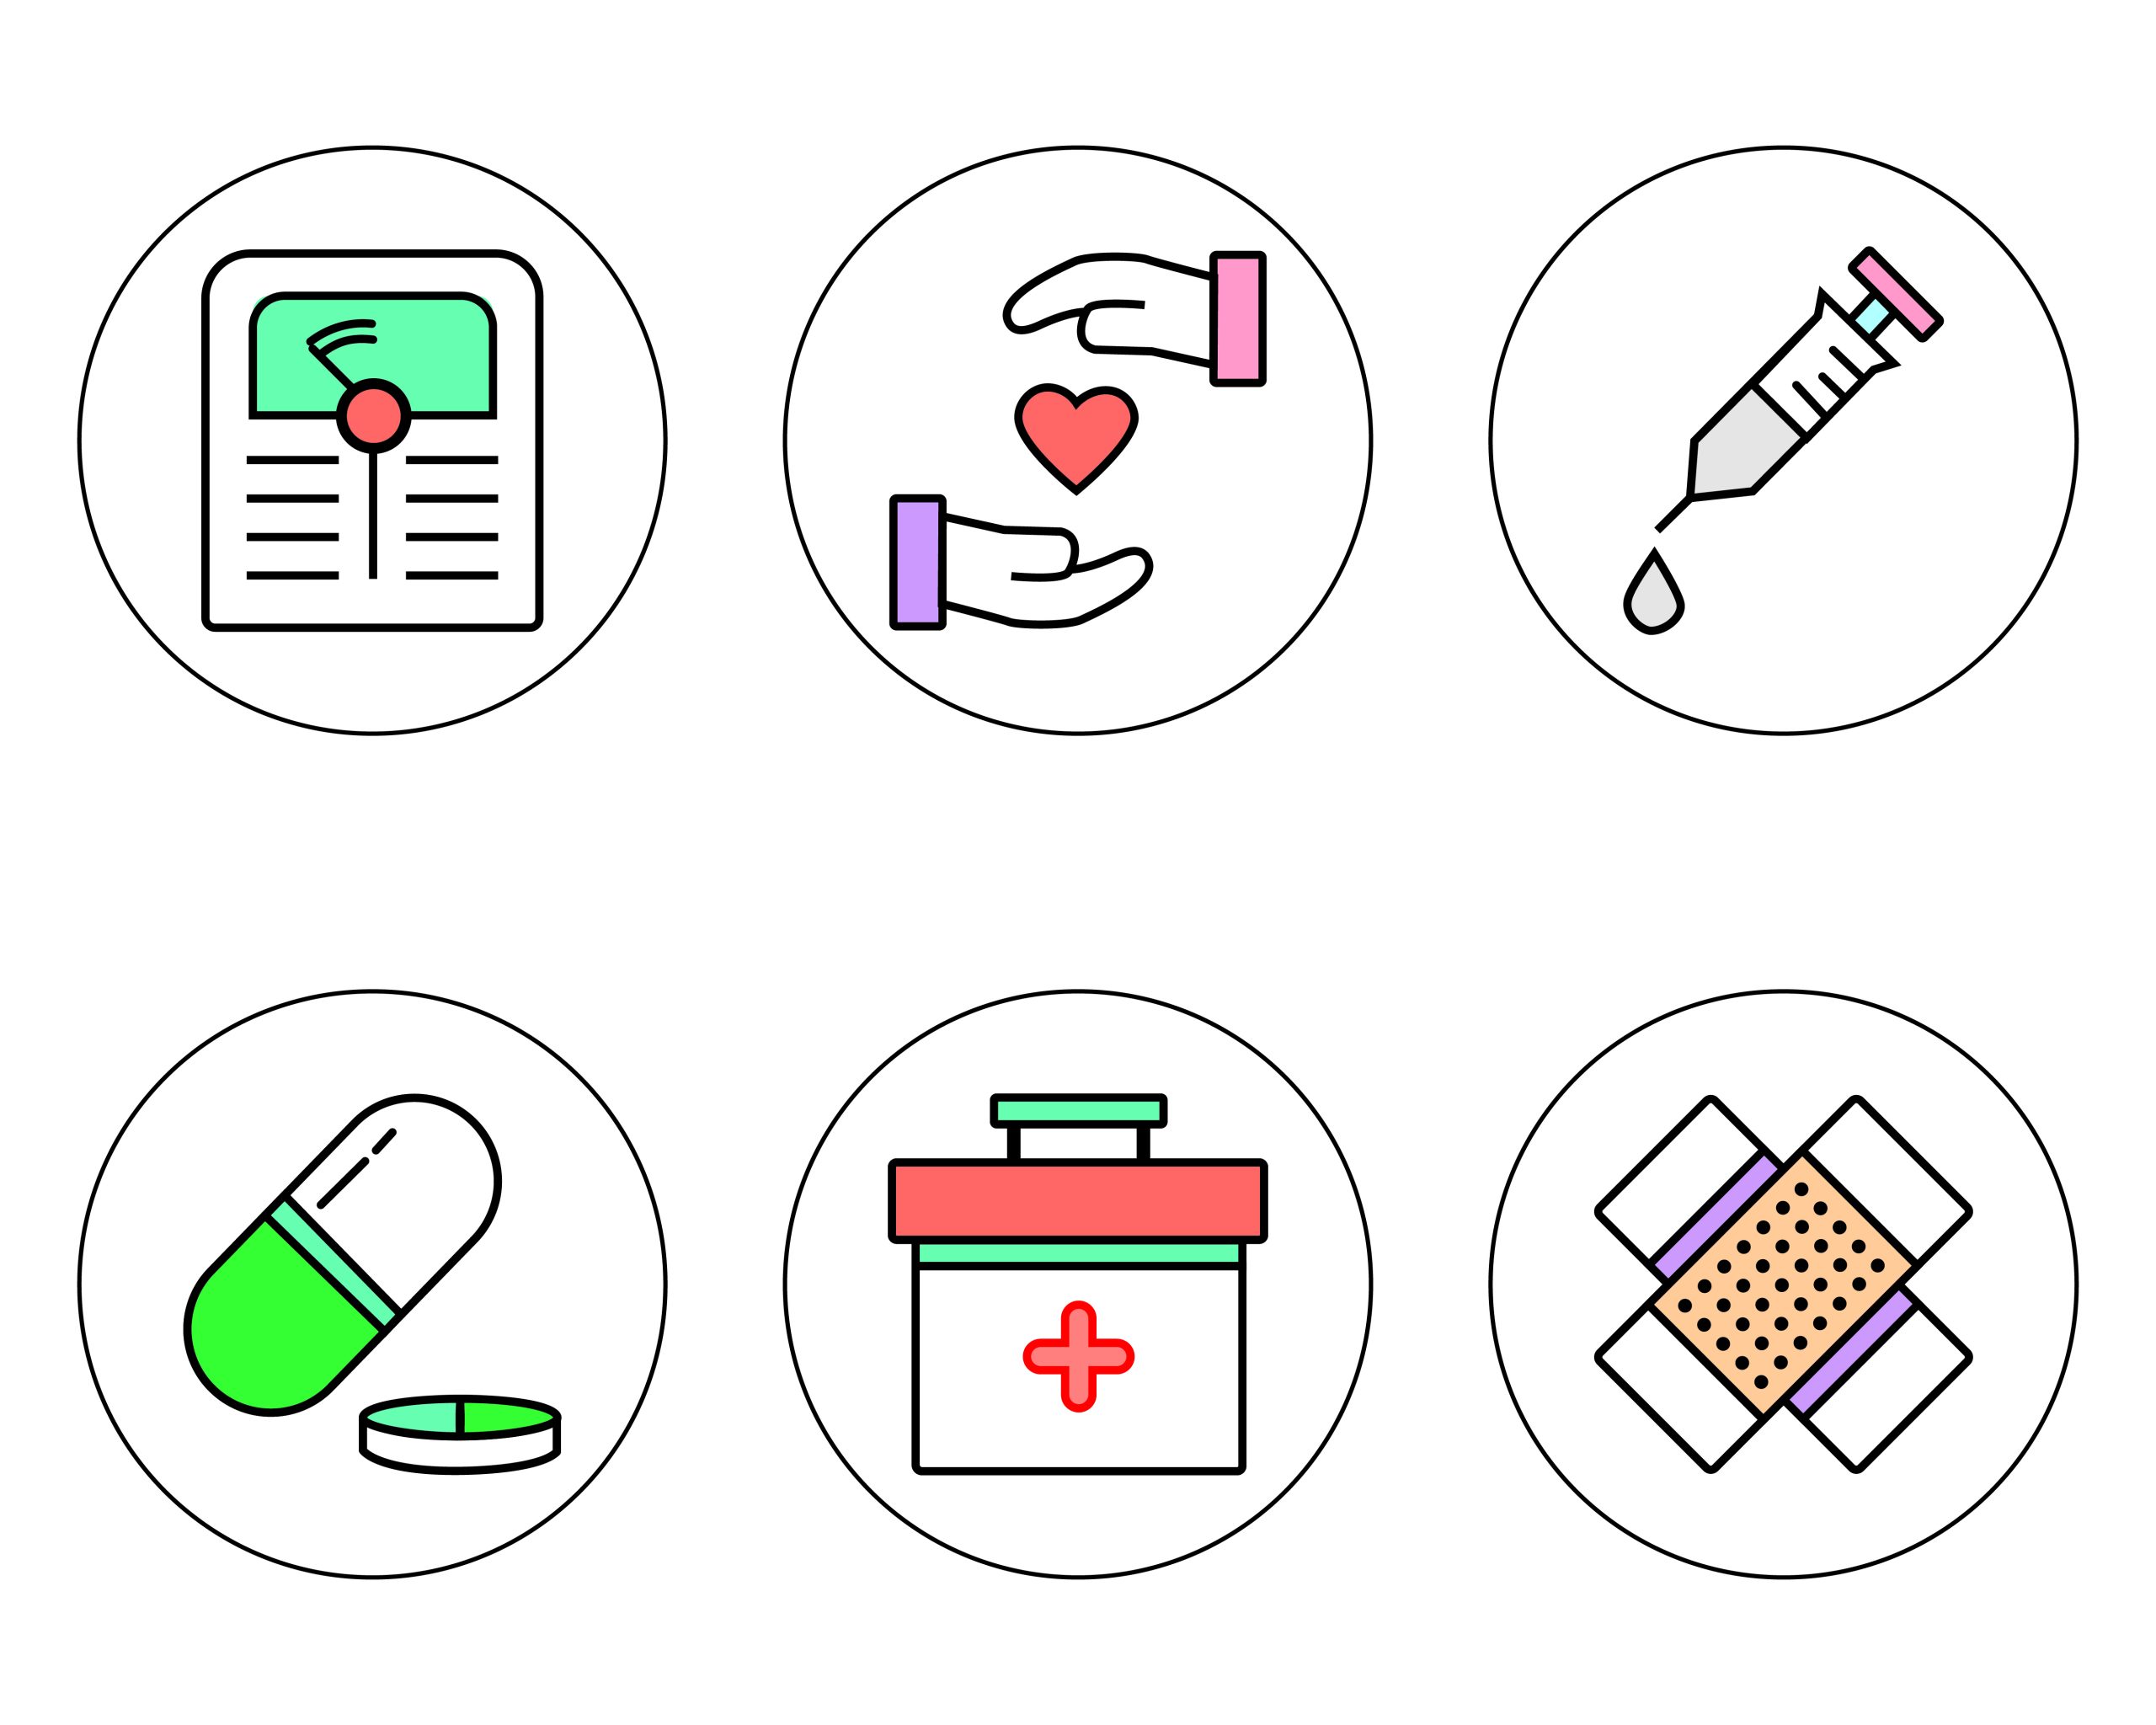 Medical tools - Free medical icons